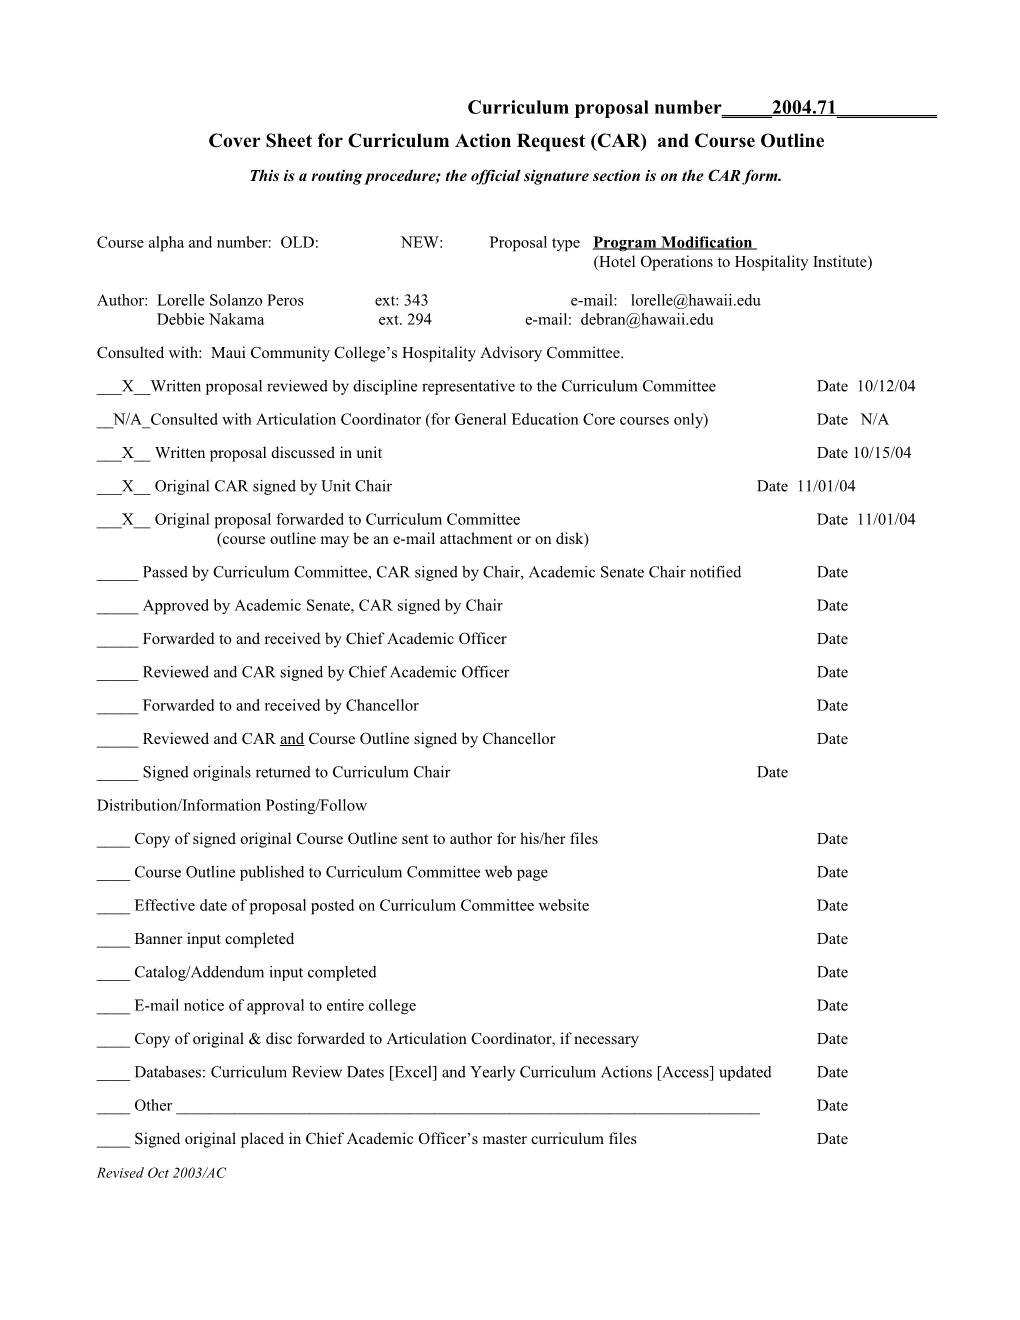 Curriculum Action Request (CAR) (Form 4-93) - Maui Community College s1